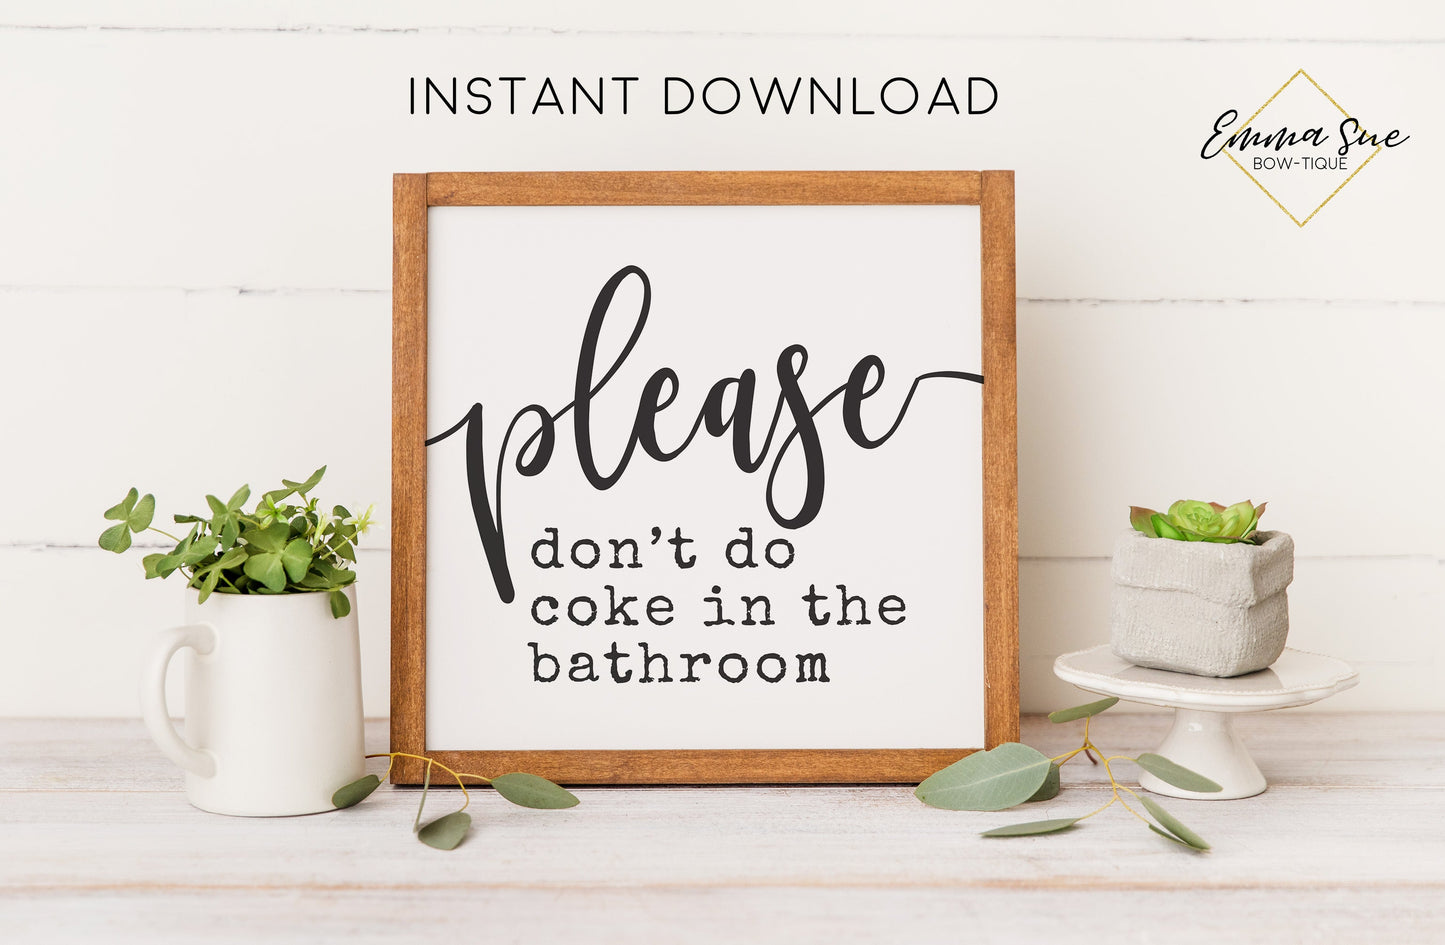 CUSTOM ORDER - Please don't do coke in the Bathroom Sign -